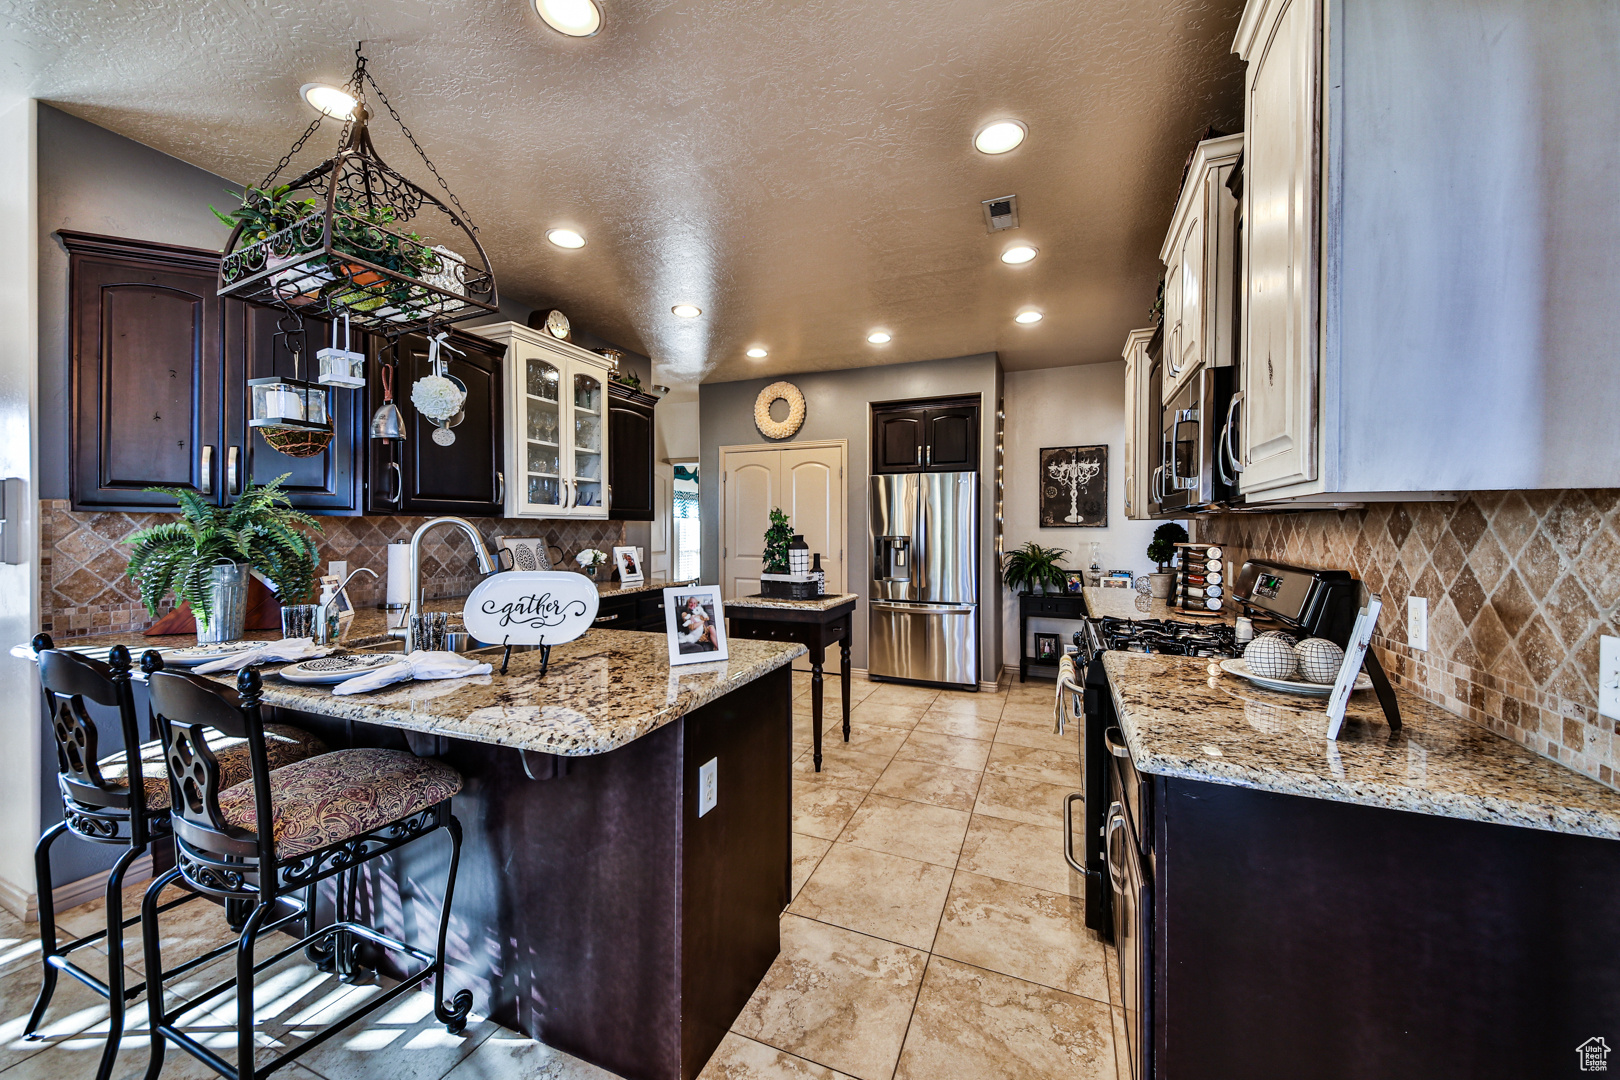 Kitchen with stainless steel fridge with ice dispenser, light tile flooring, backsplash, and light stone countertops